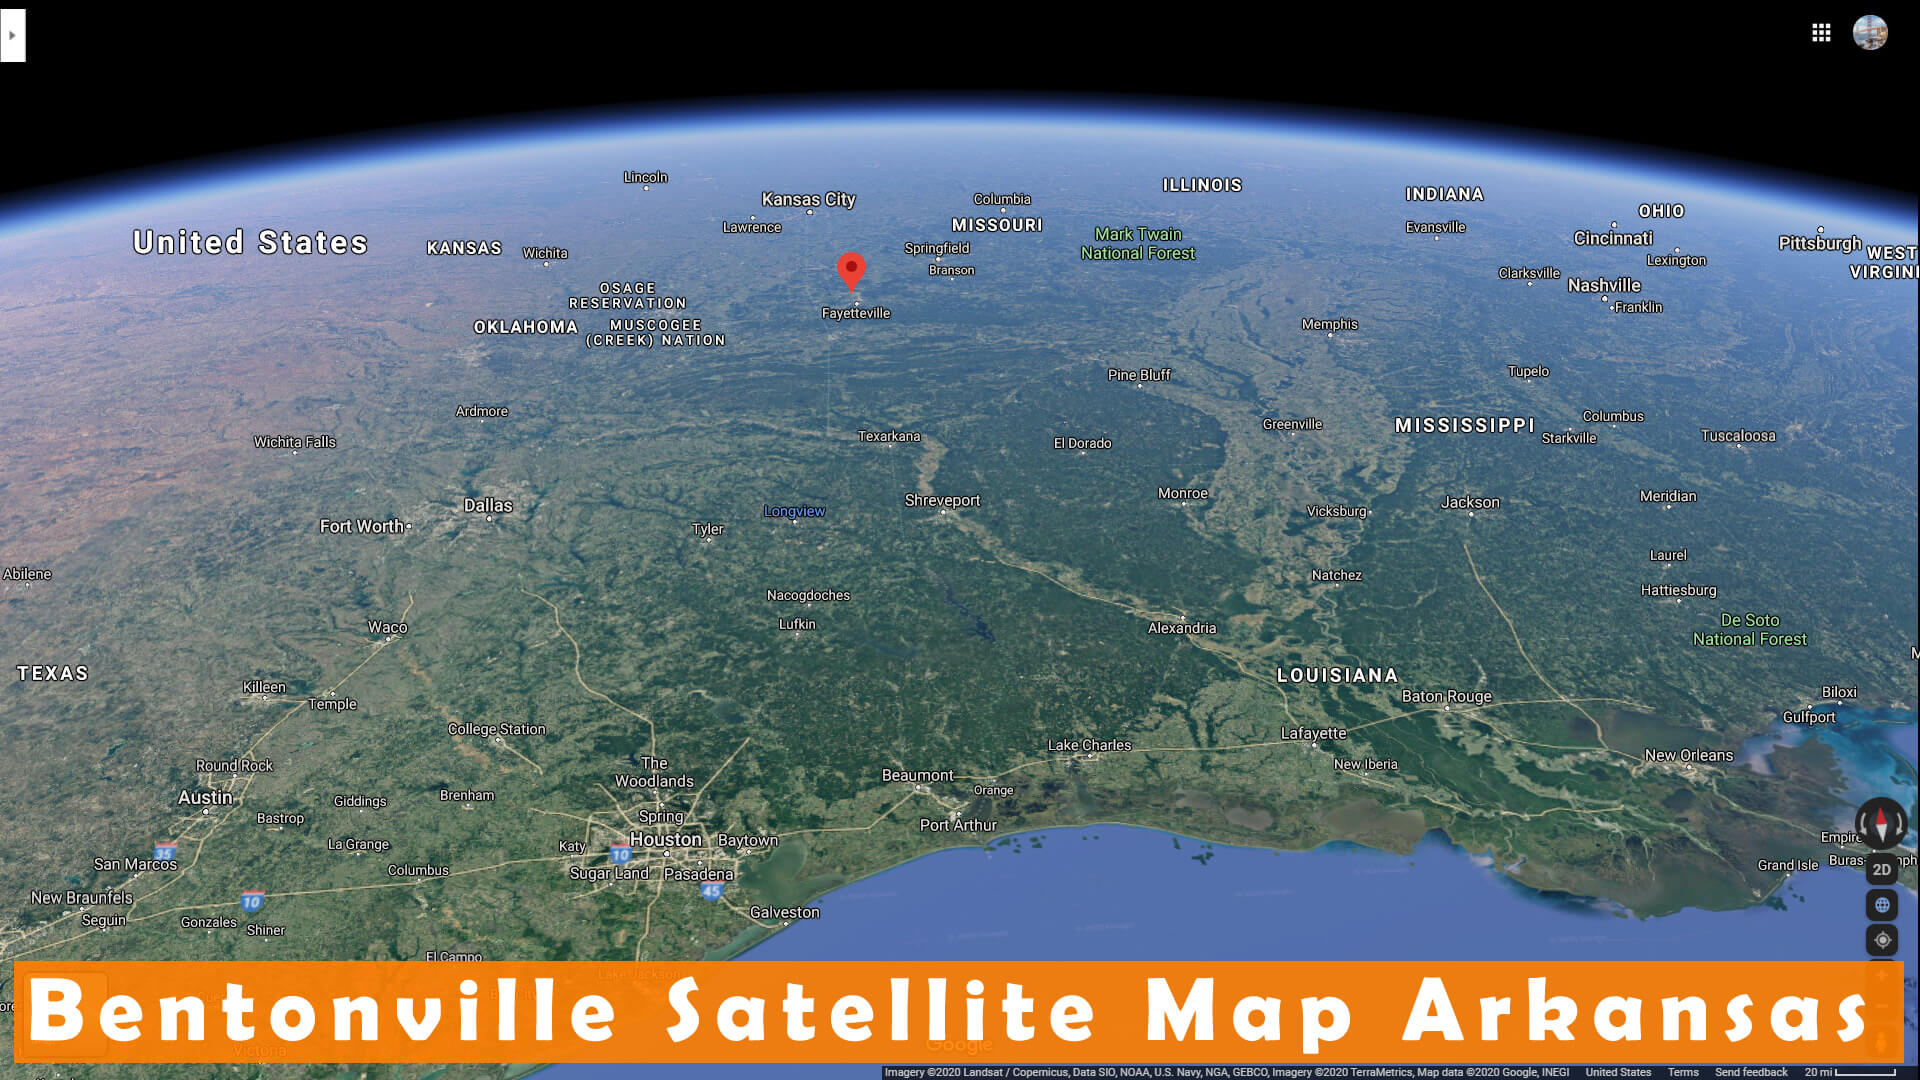 Bentonville Satellite Map Arkansas